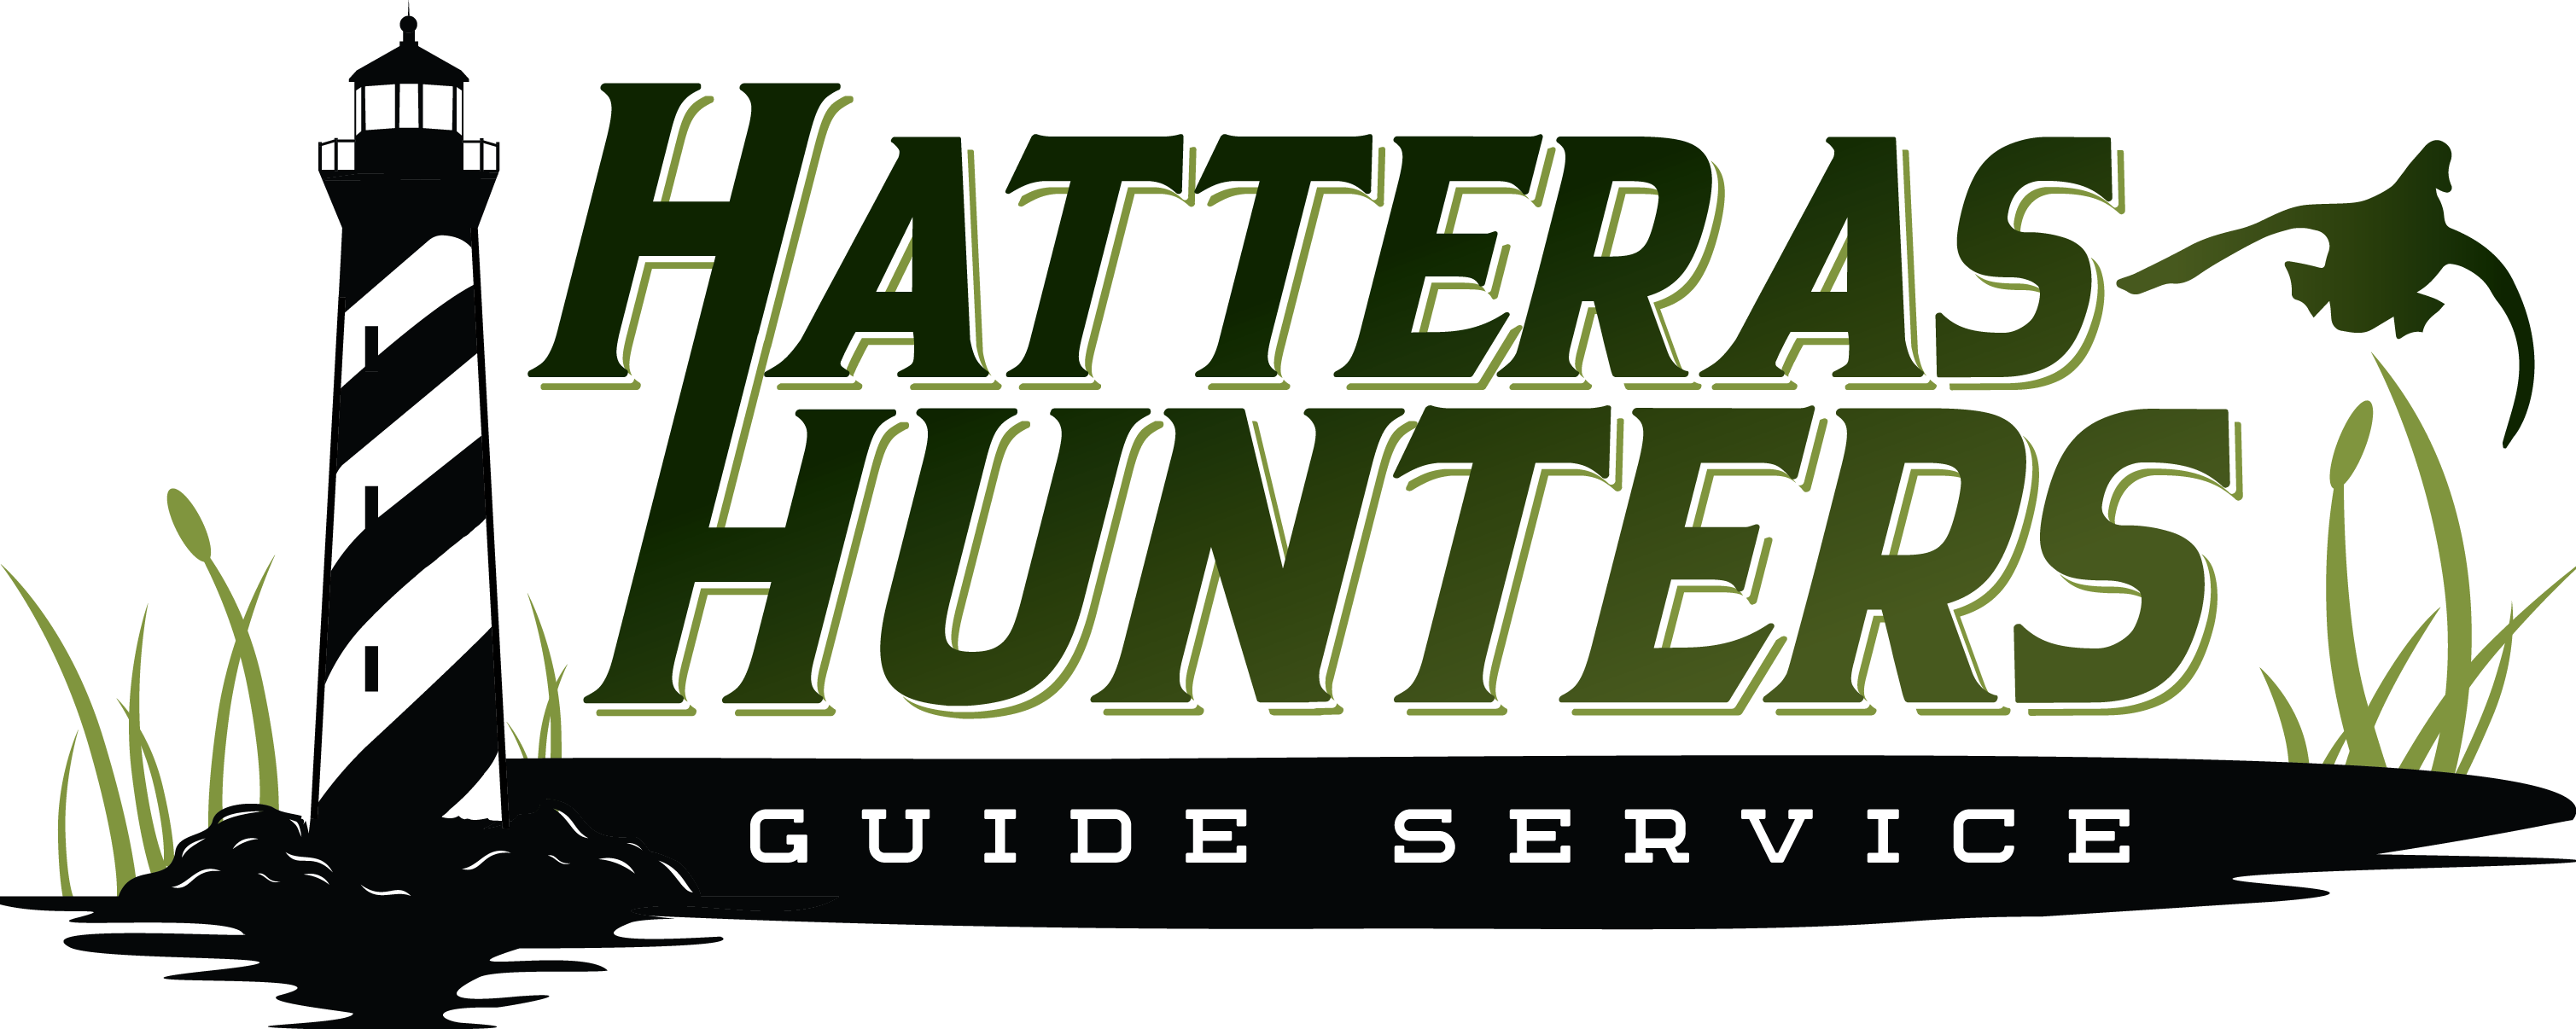 Hatteras Hunters